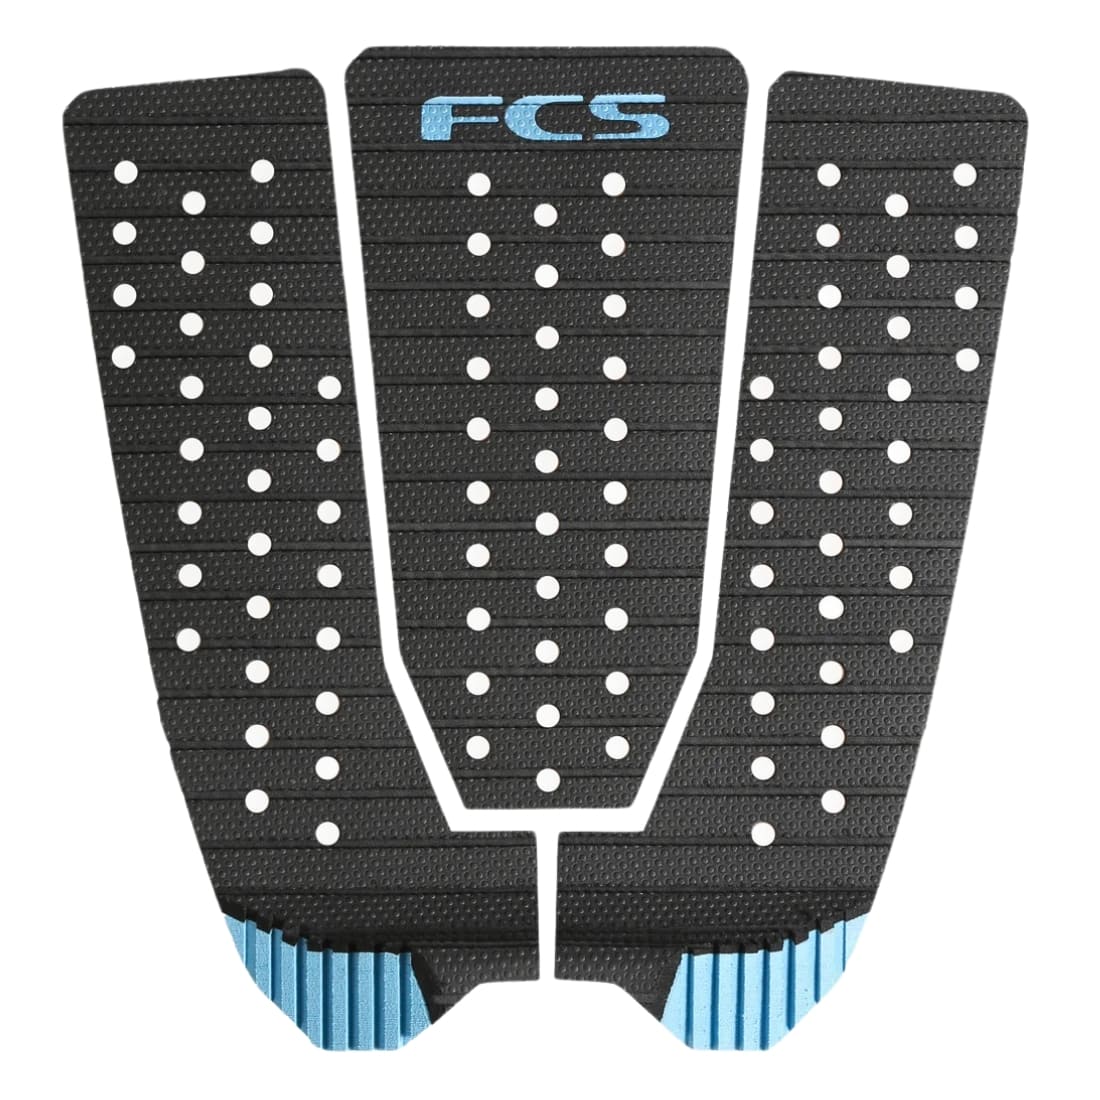 FCS Kolohe Andino Tread-Lite 3 Piece Surfboard Tail Pad - Black/Tranquil Blue - 3 Piece Tail Pad by FCS